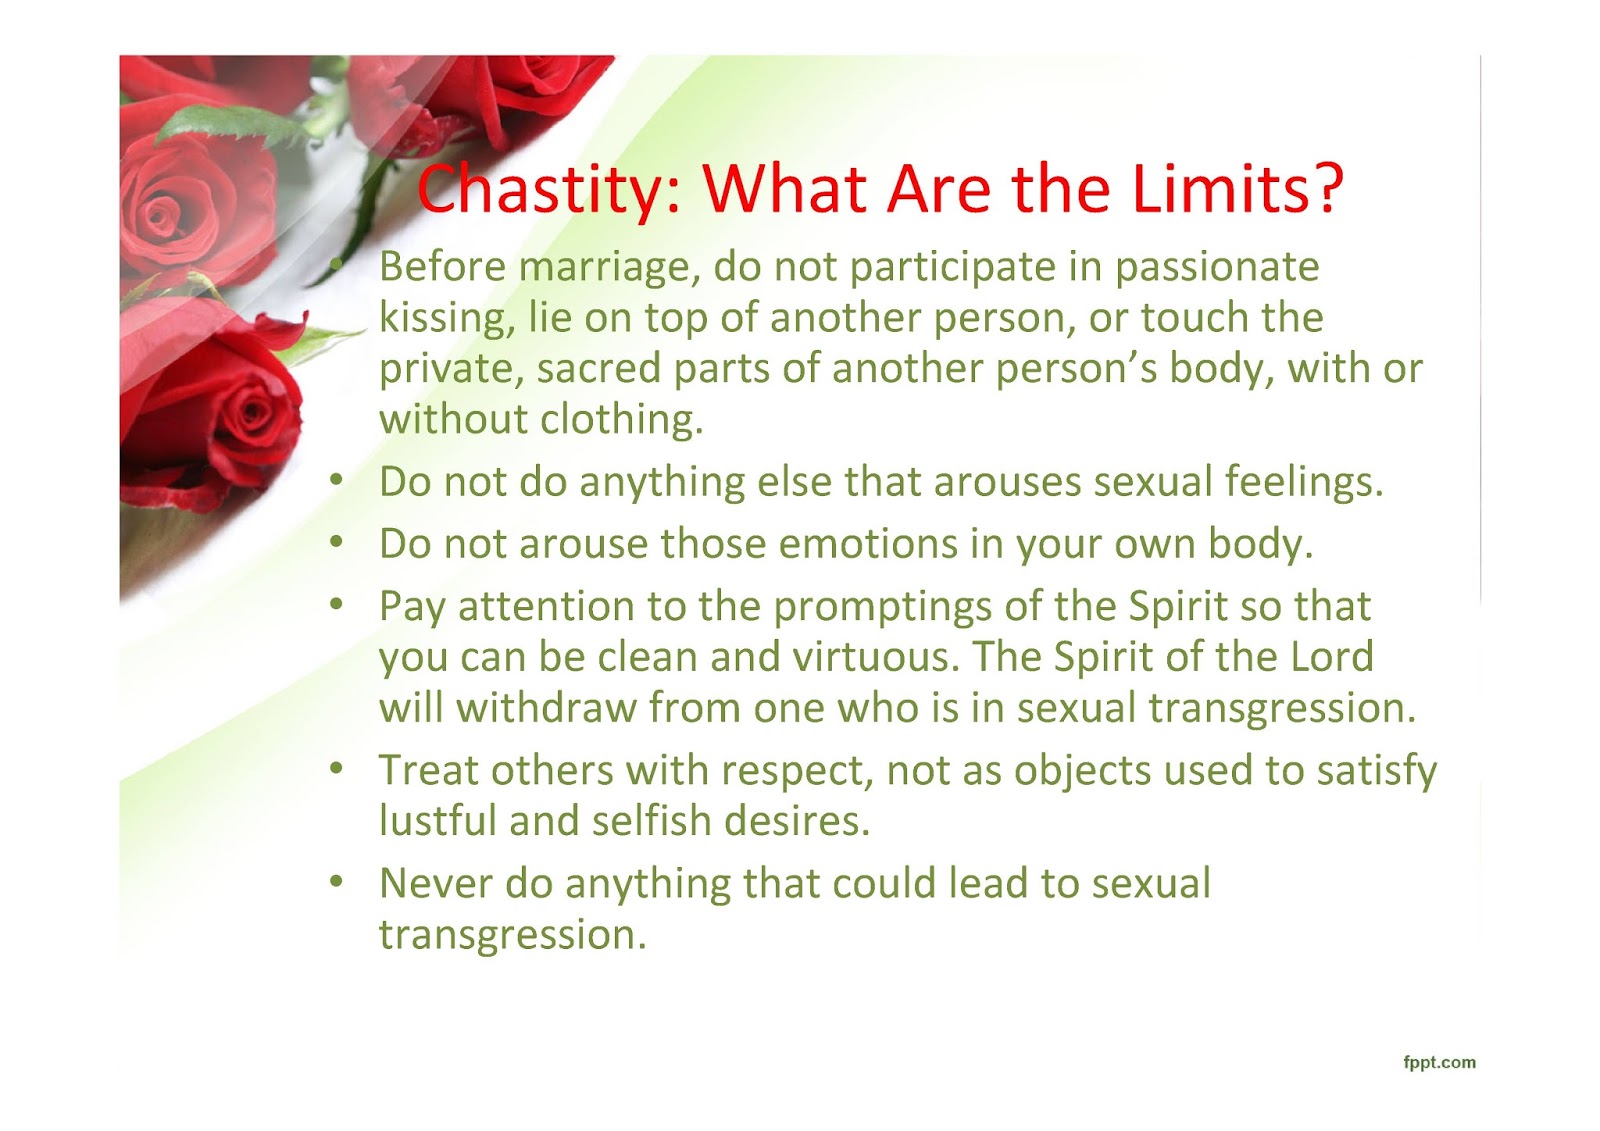 Chastity #3